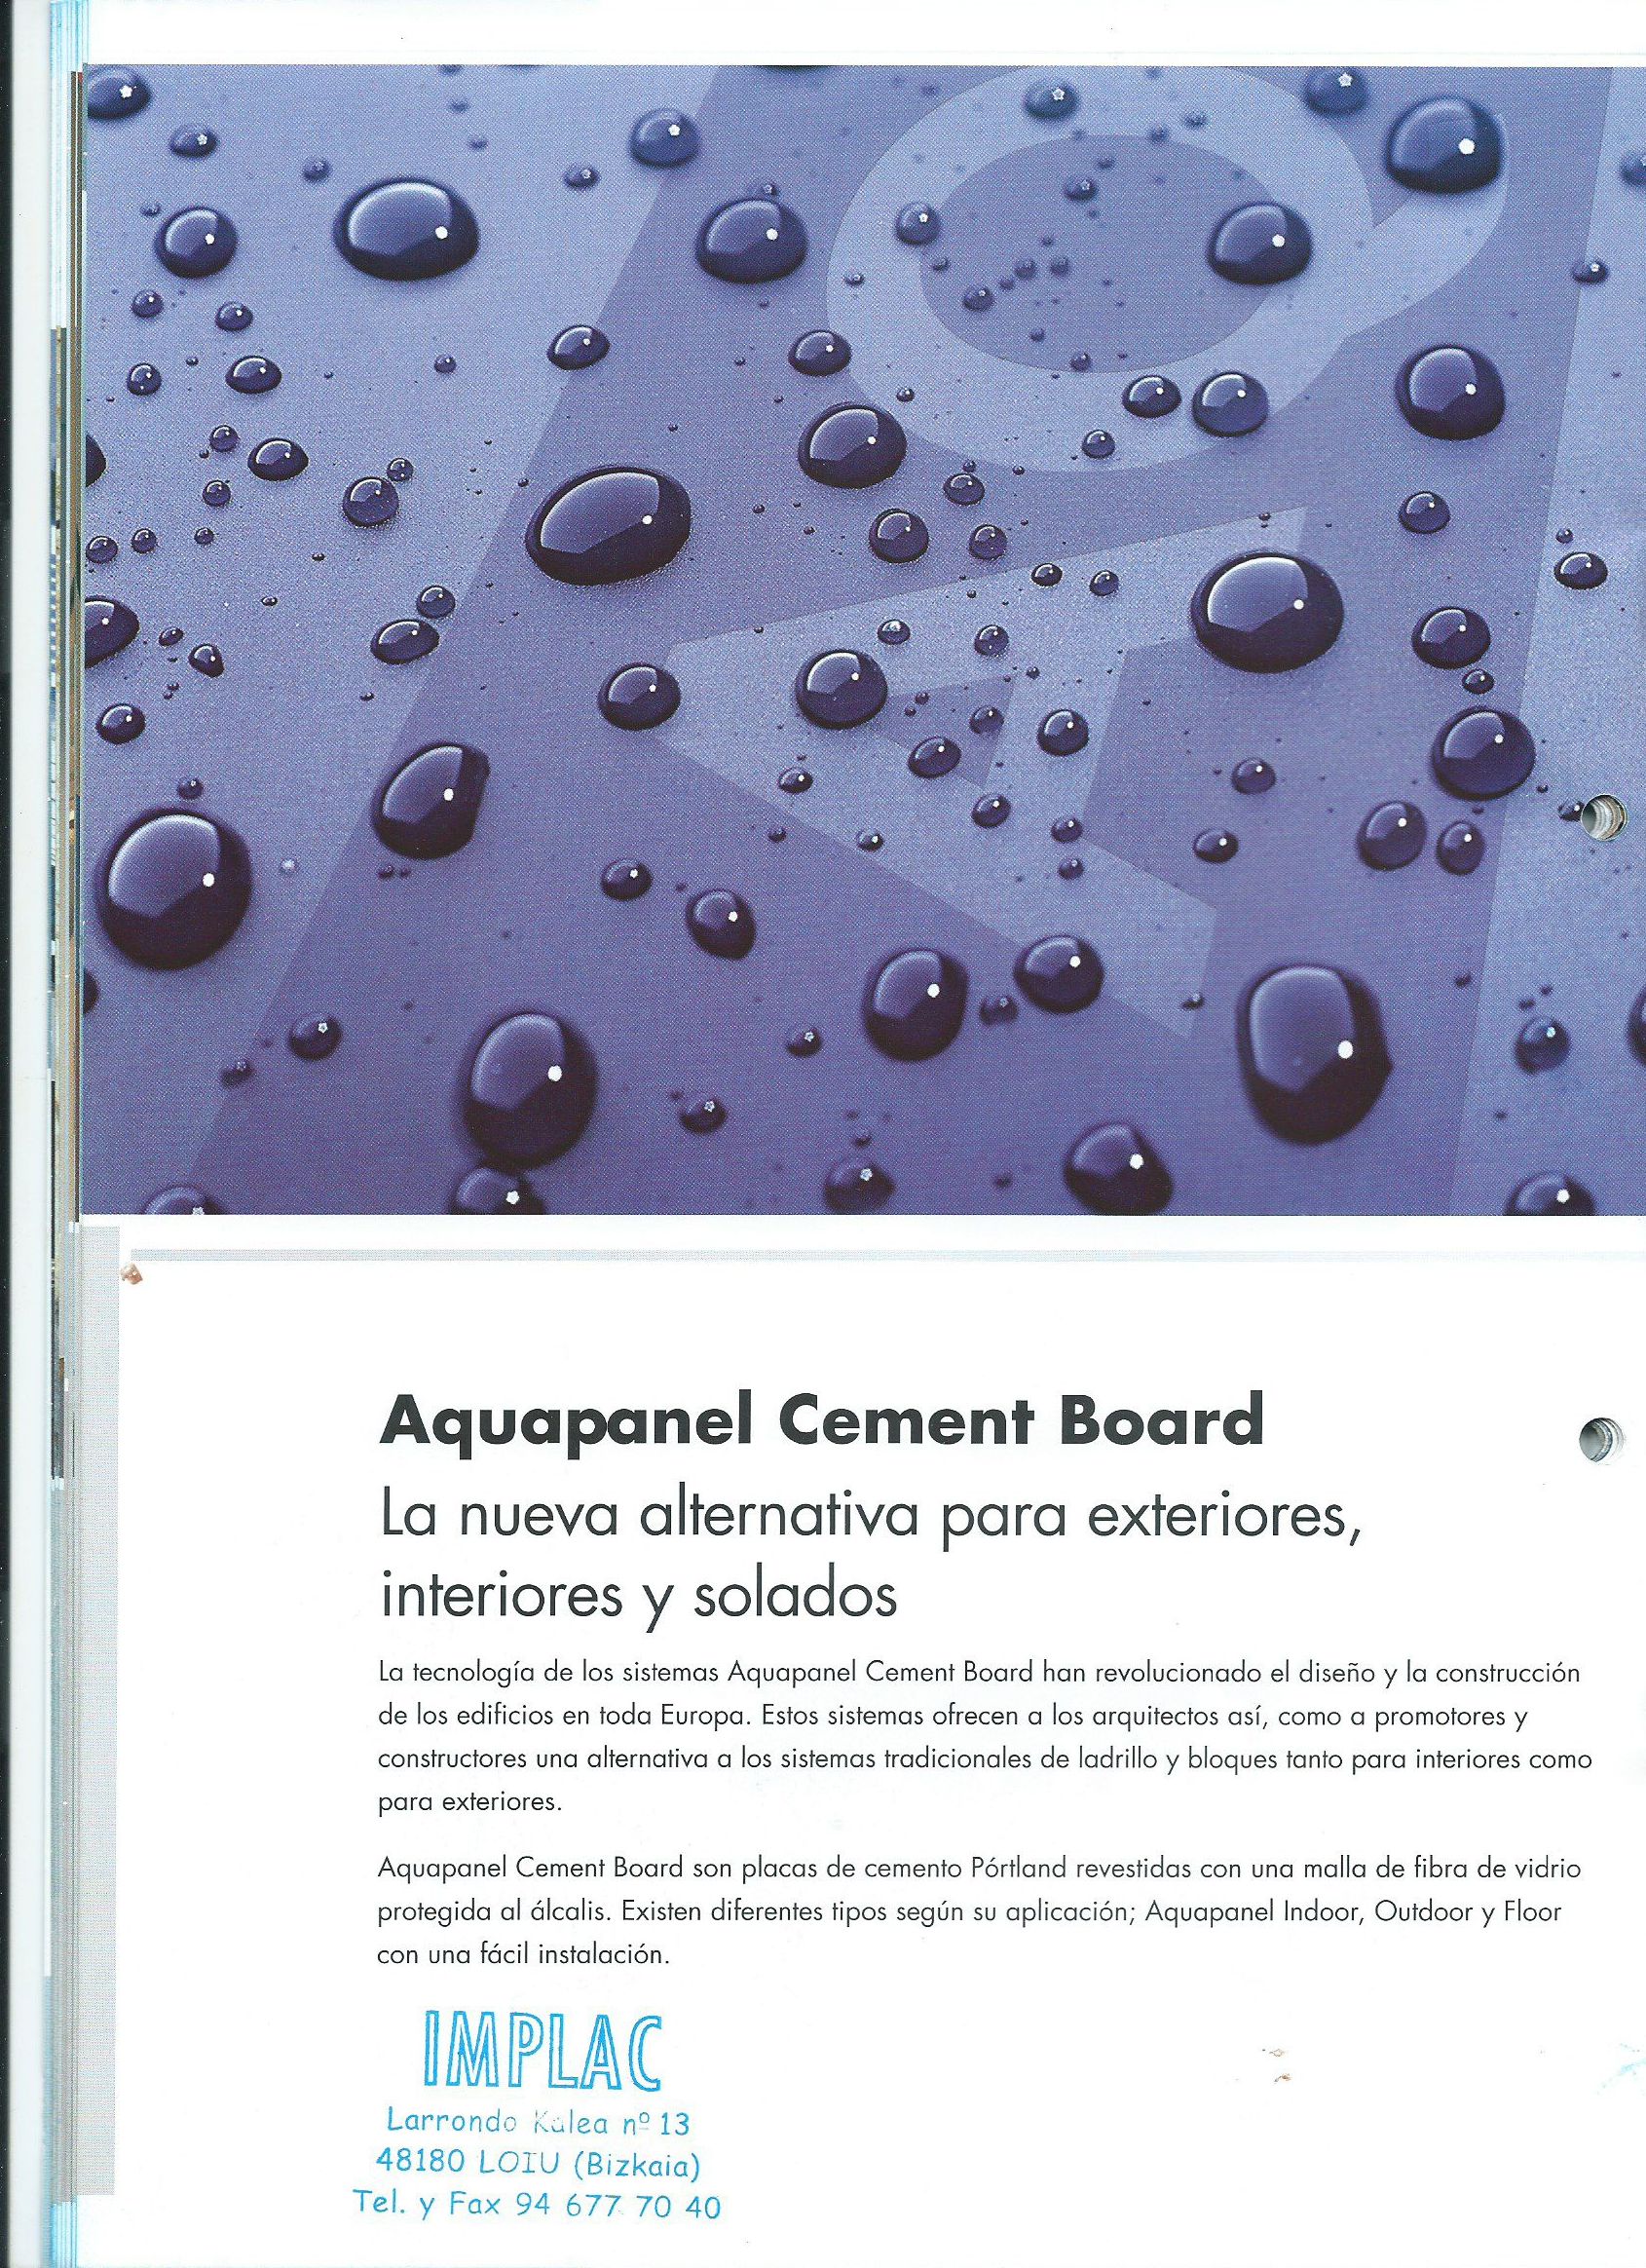 Aquapanel Cement Board }}